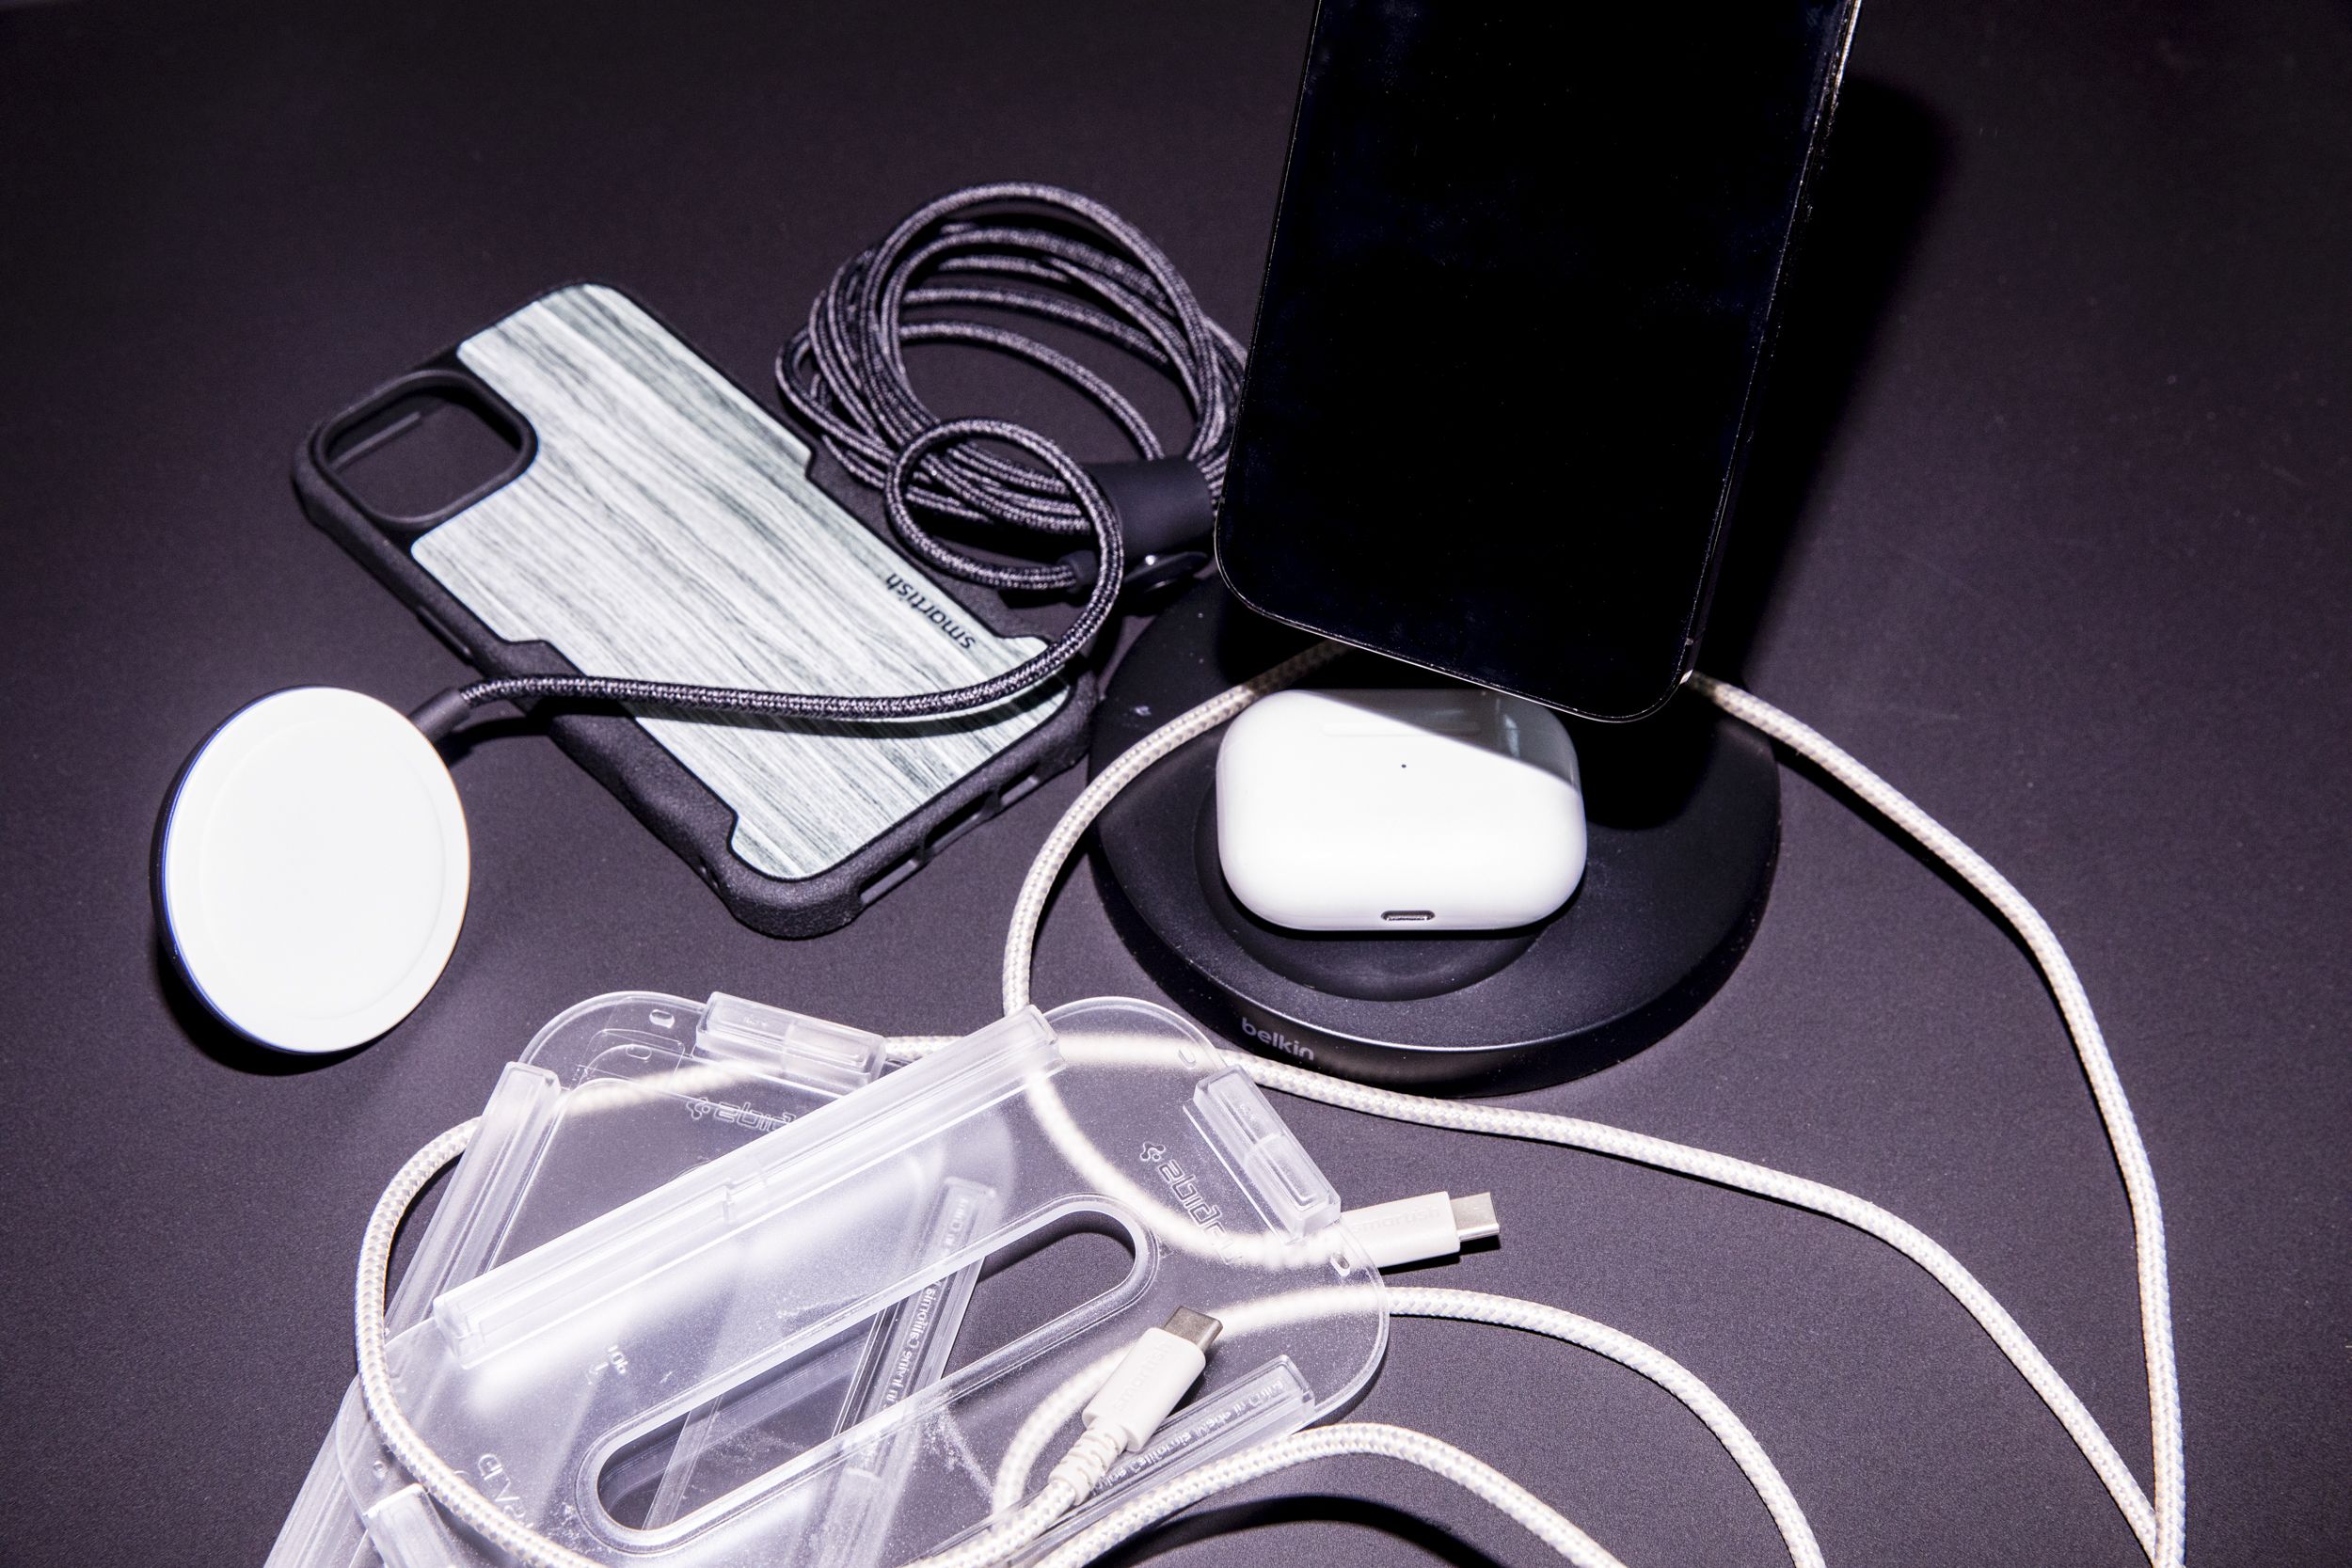 15 Best iPhone Accessories in - Accessories for iPhones